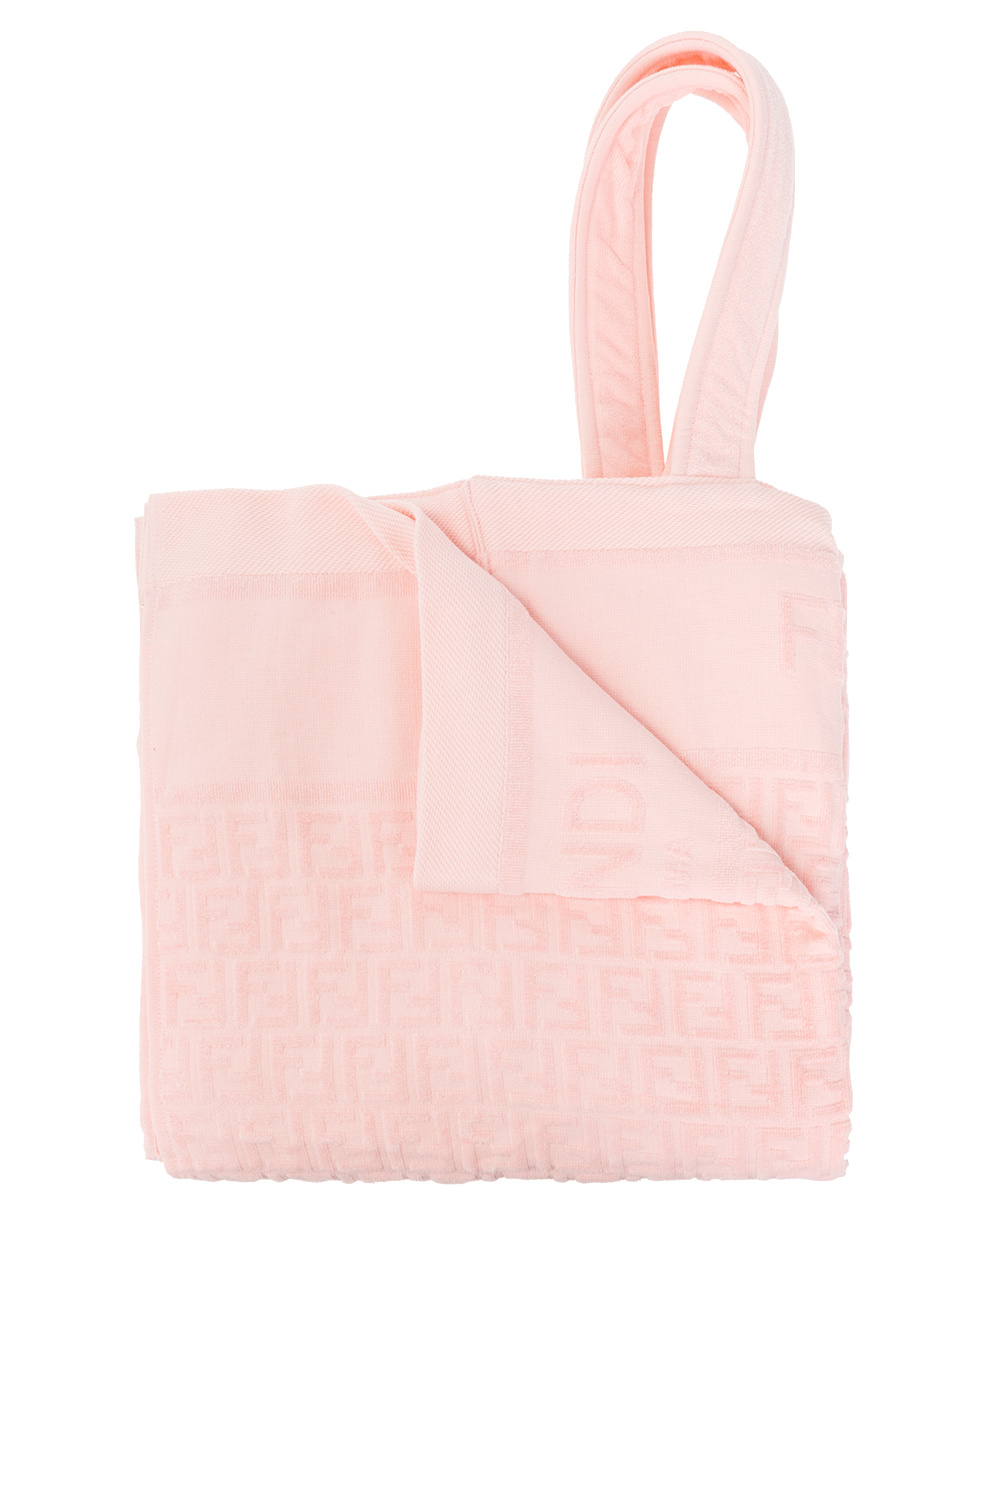 Fendi Monster Diaper Bag Printed Nylon Pink 769301